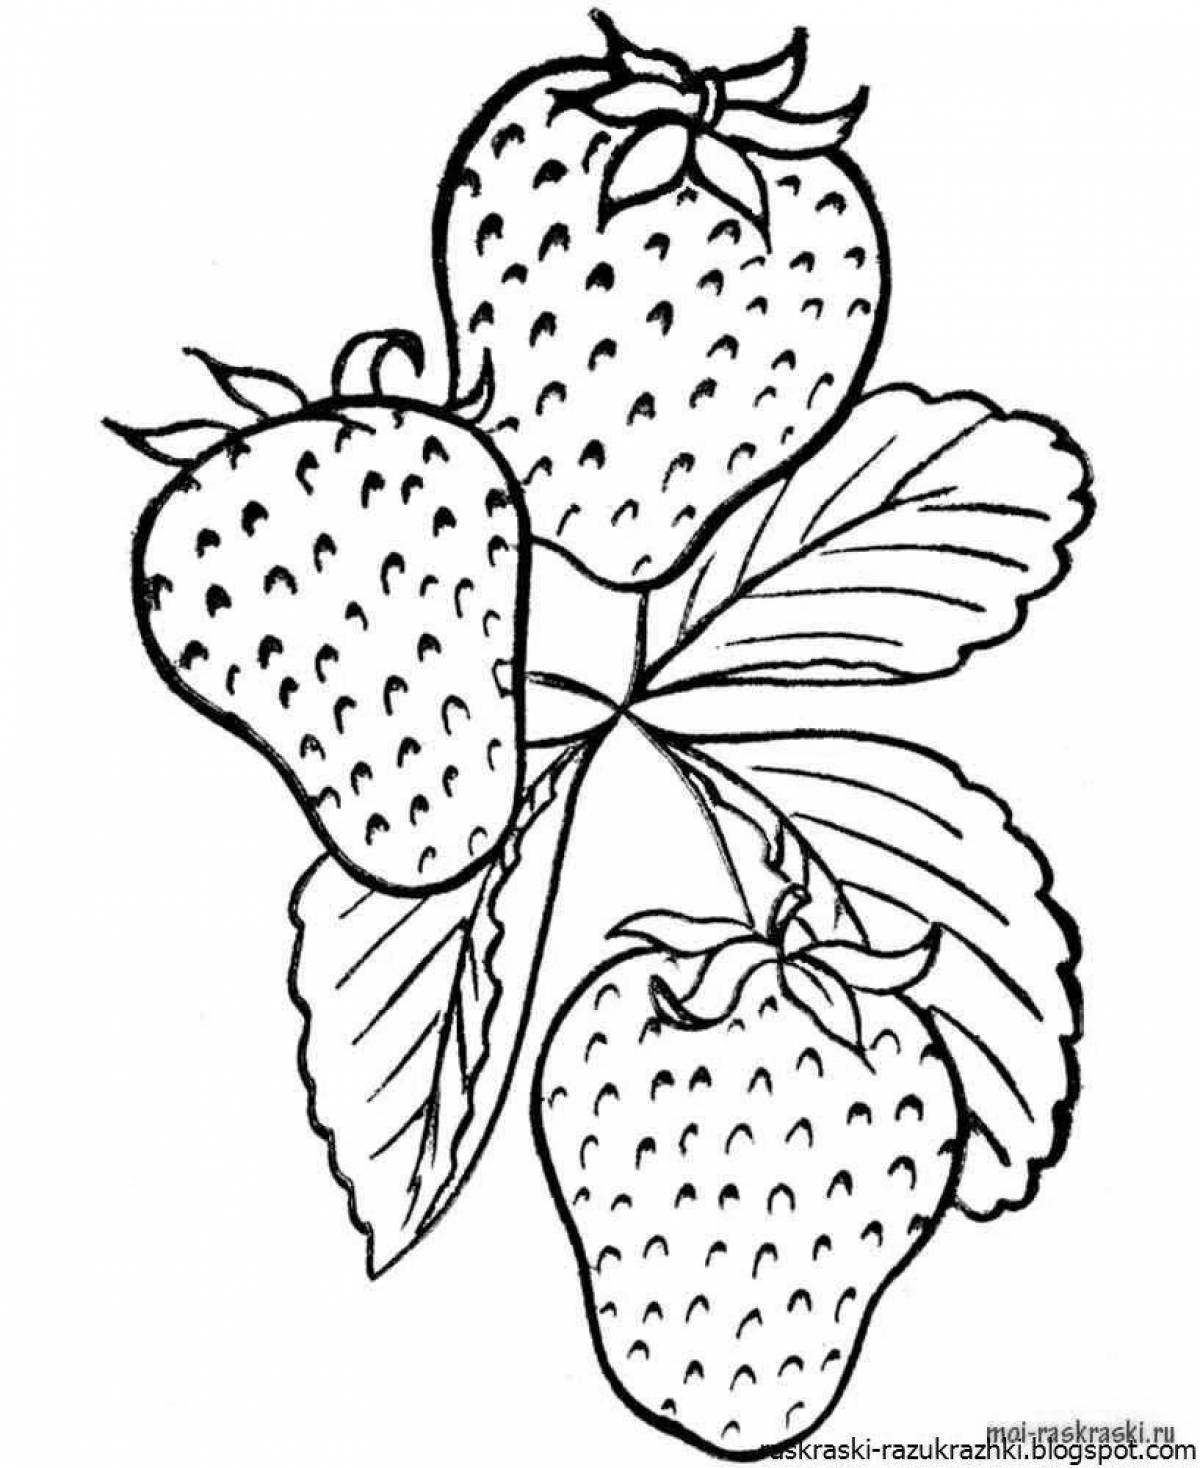 Раскраска ягоды: малина, земляника